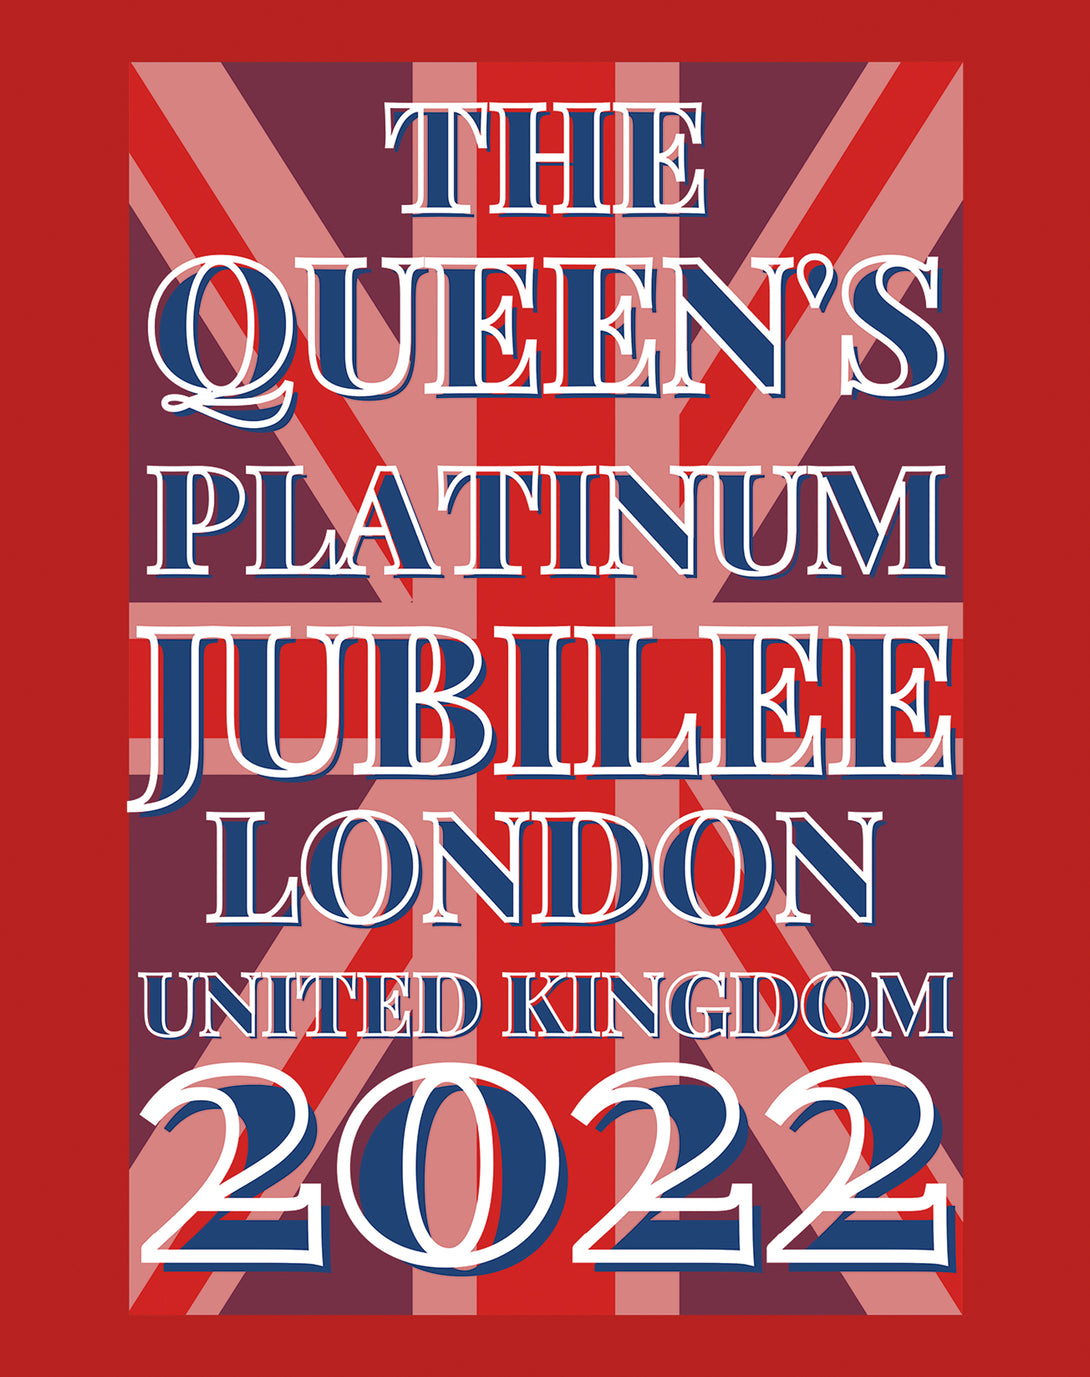 The Queen's Platinum Jubilee London UK Flag Men's Tshirt (Red)